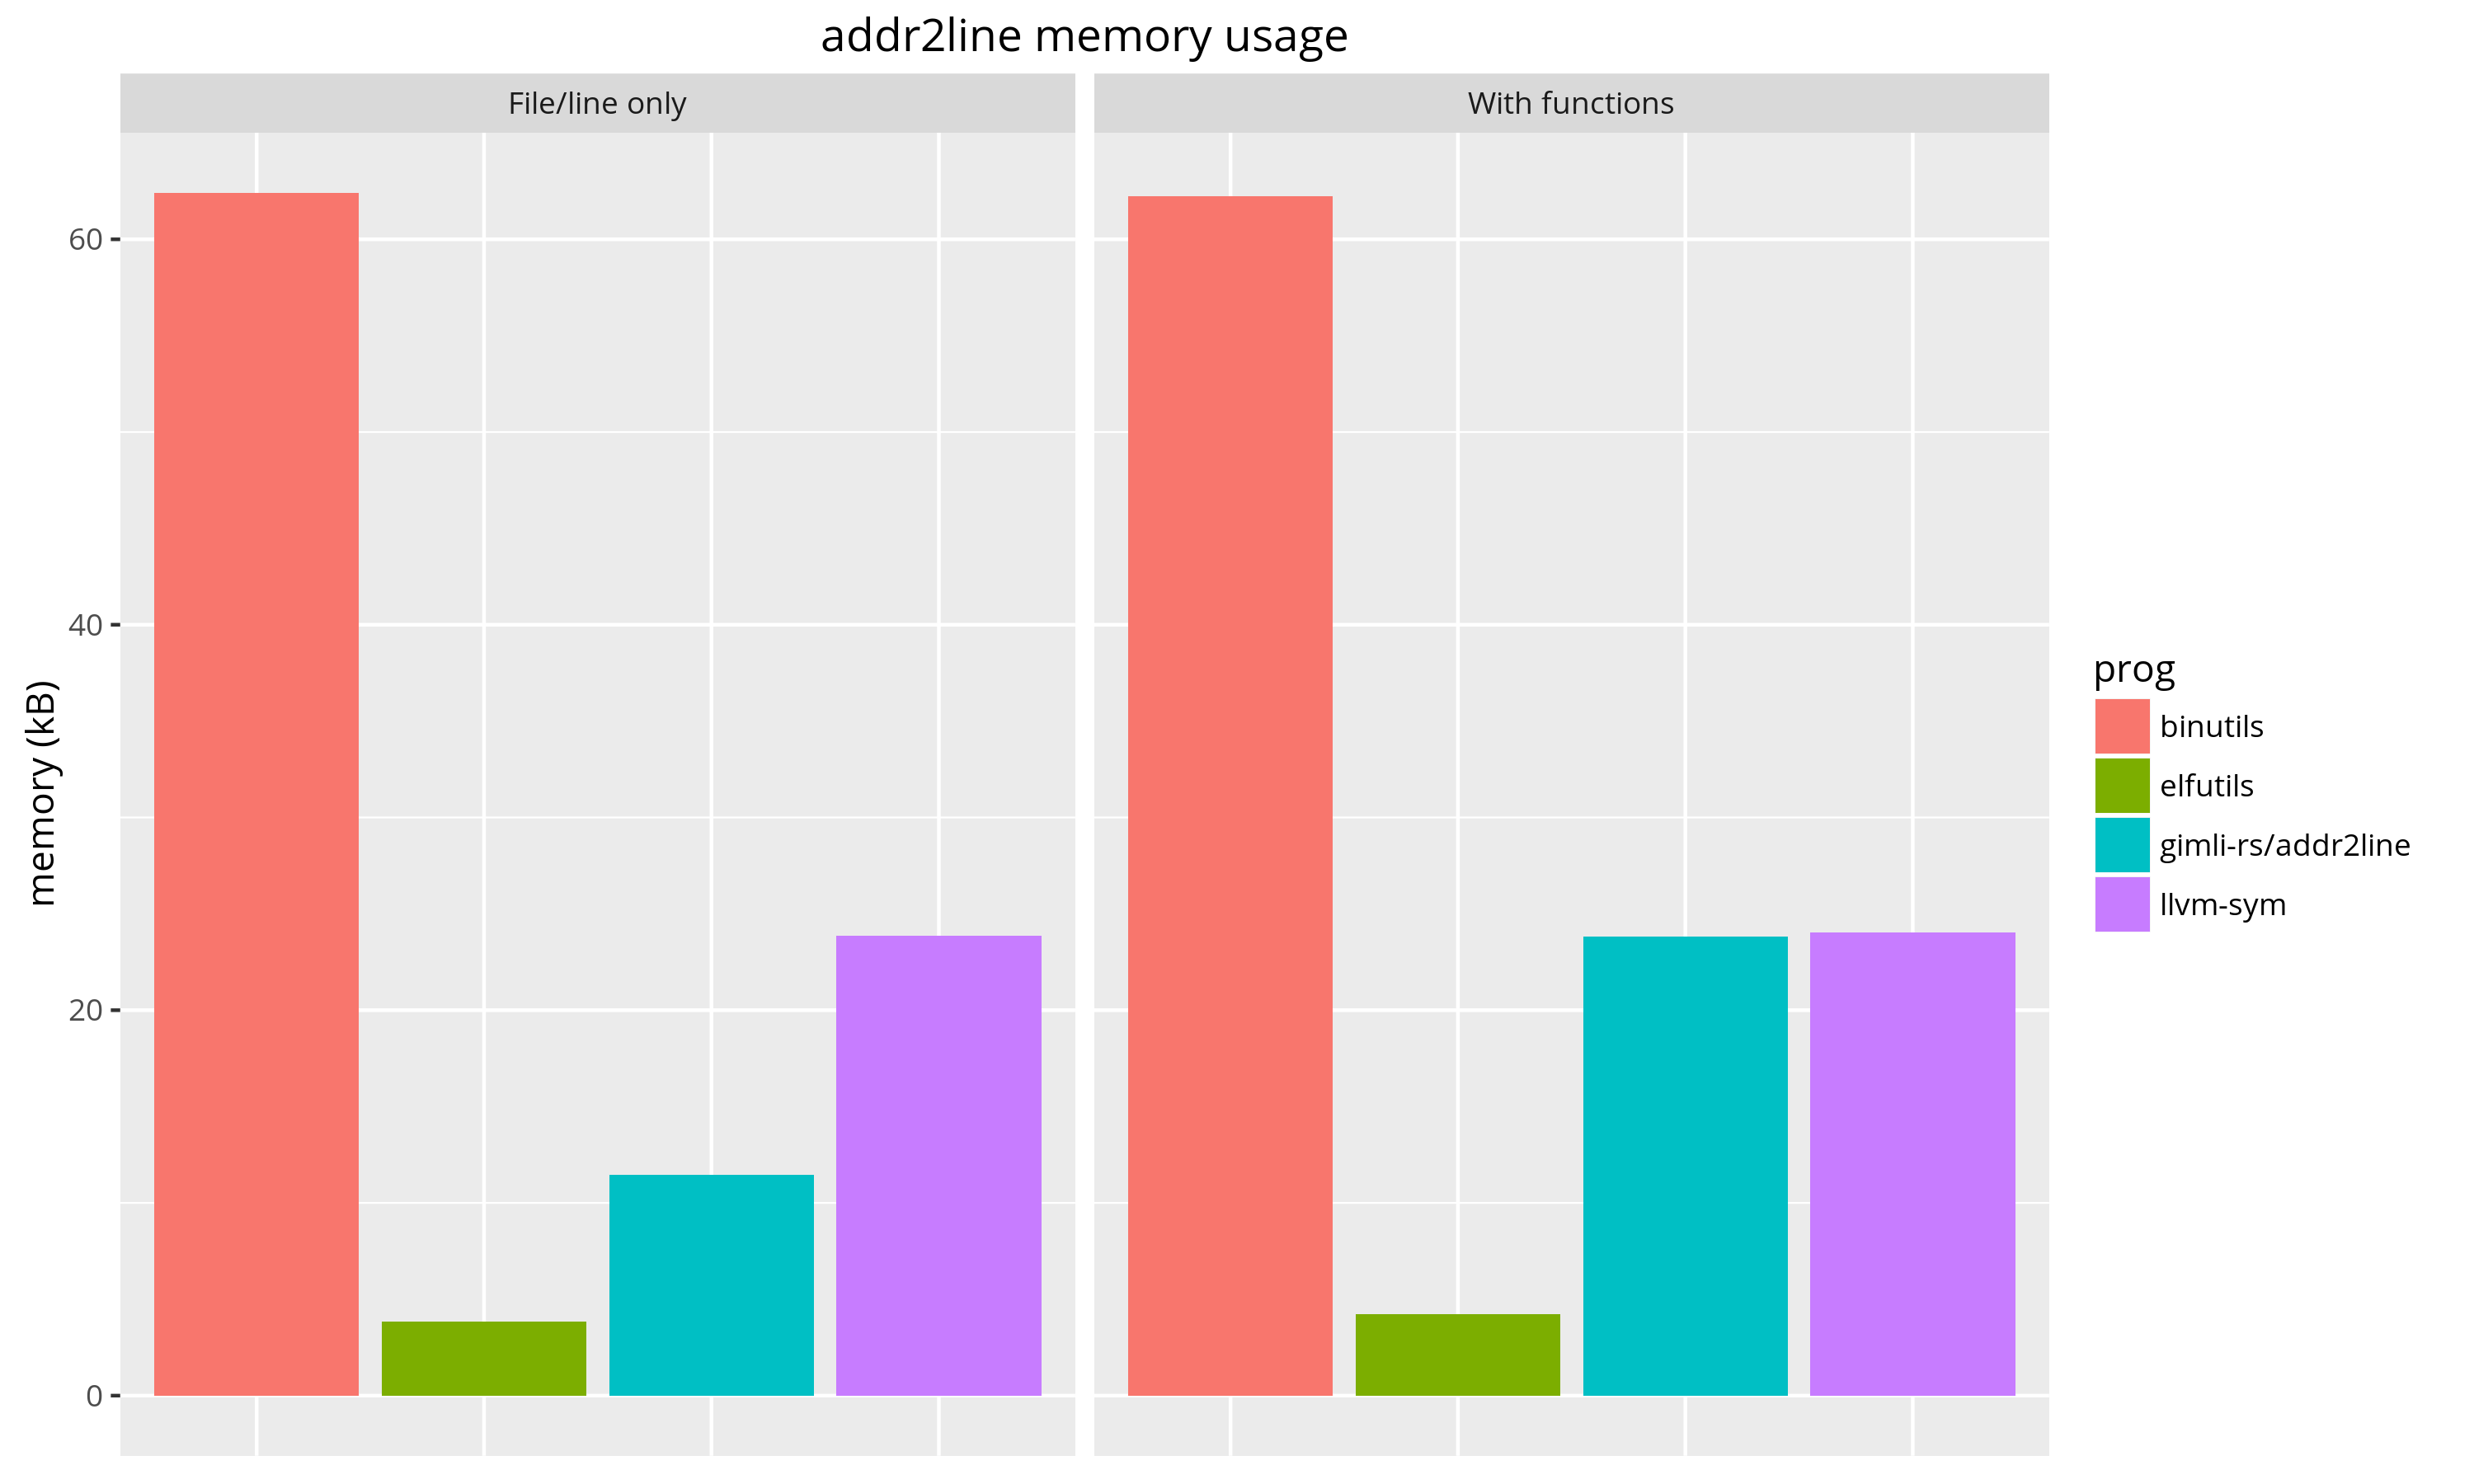 addr2line memory